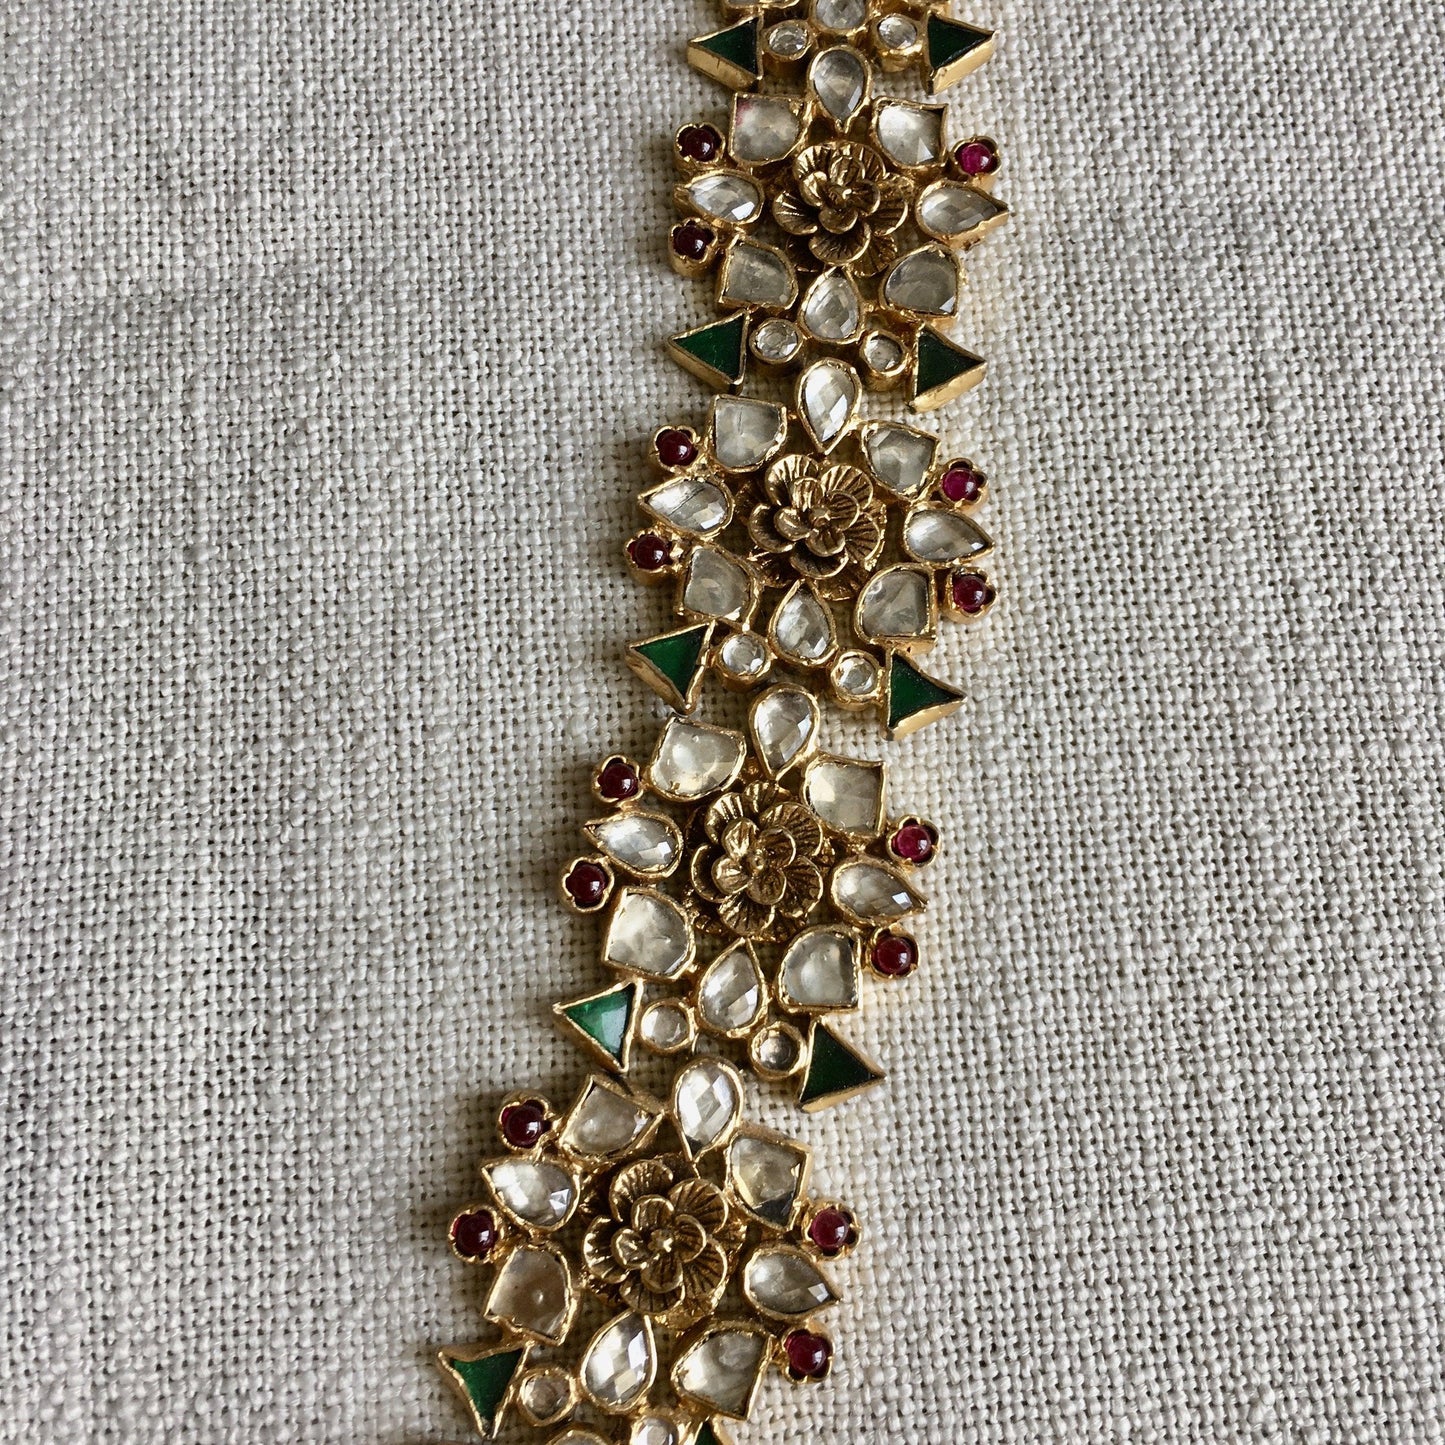 Gold Plated Kundan Necklace - Angaja Silver